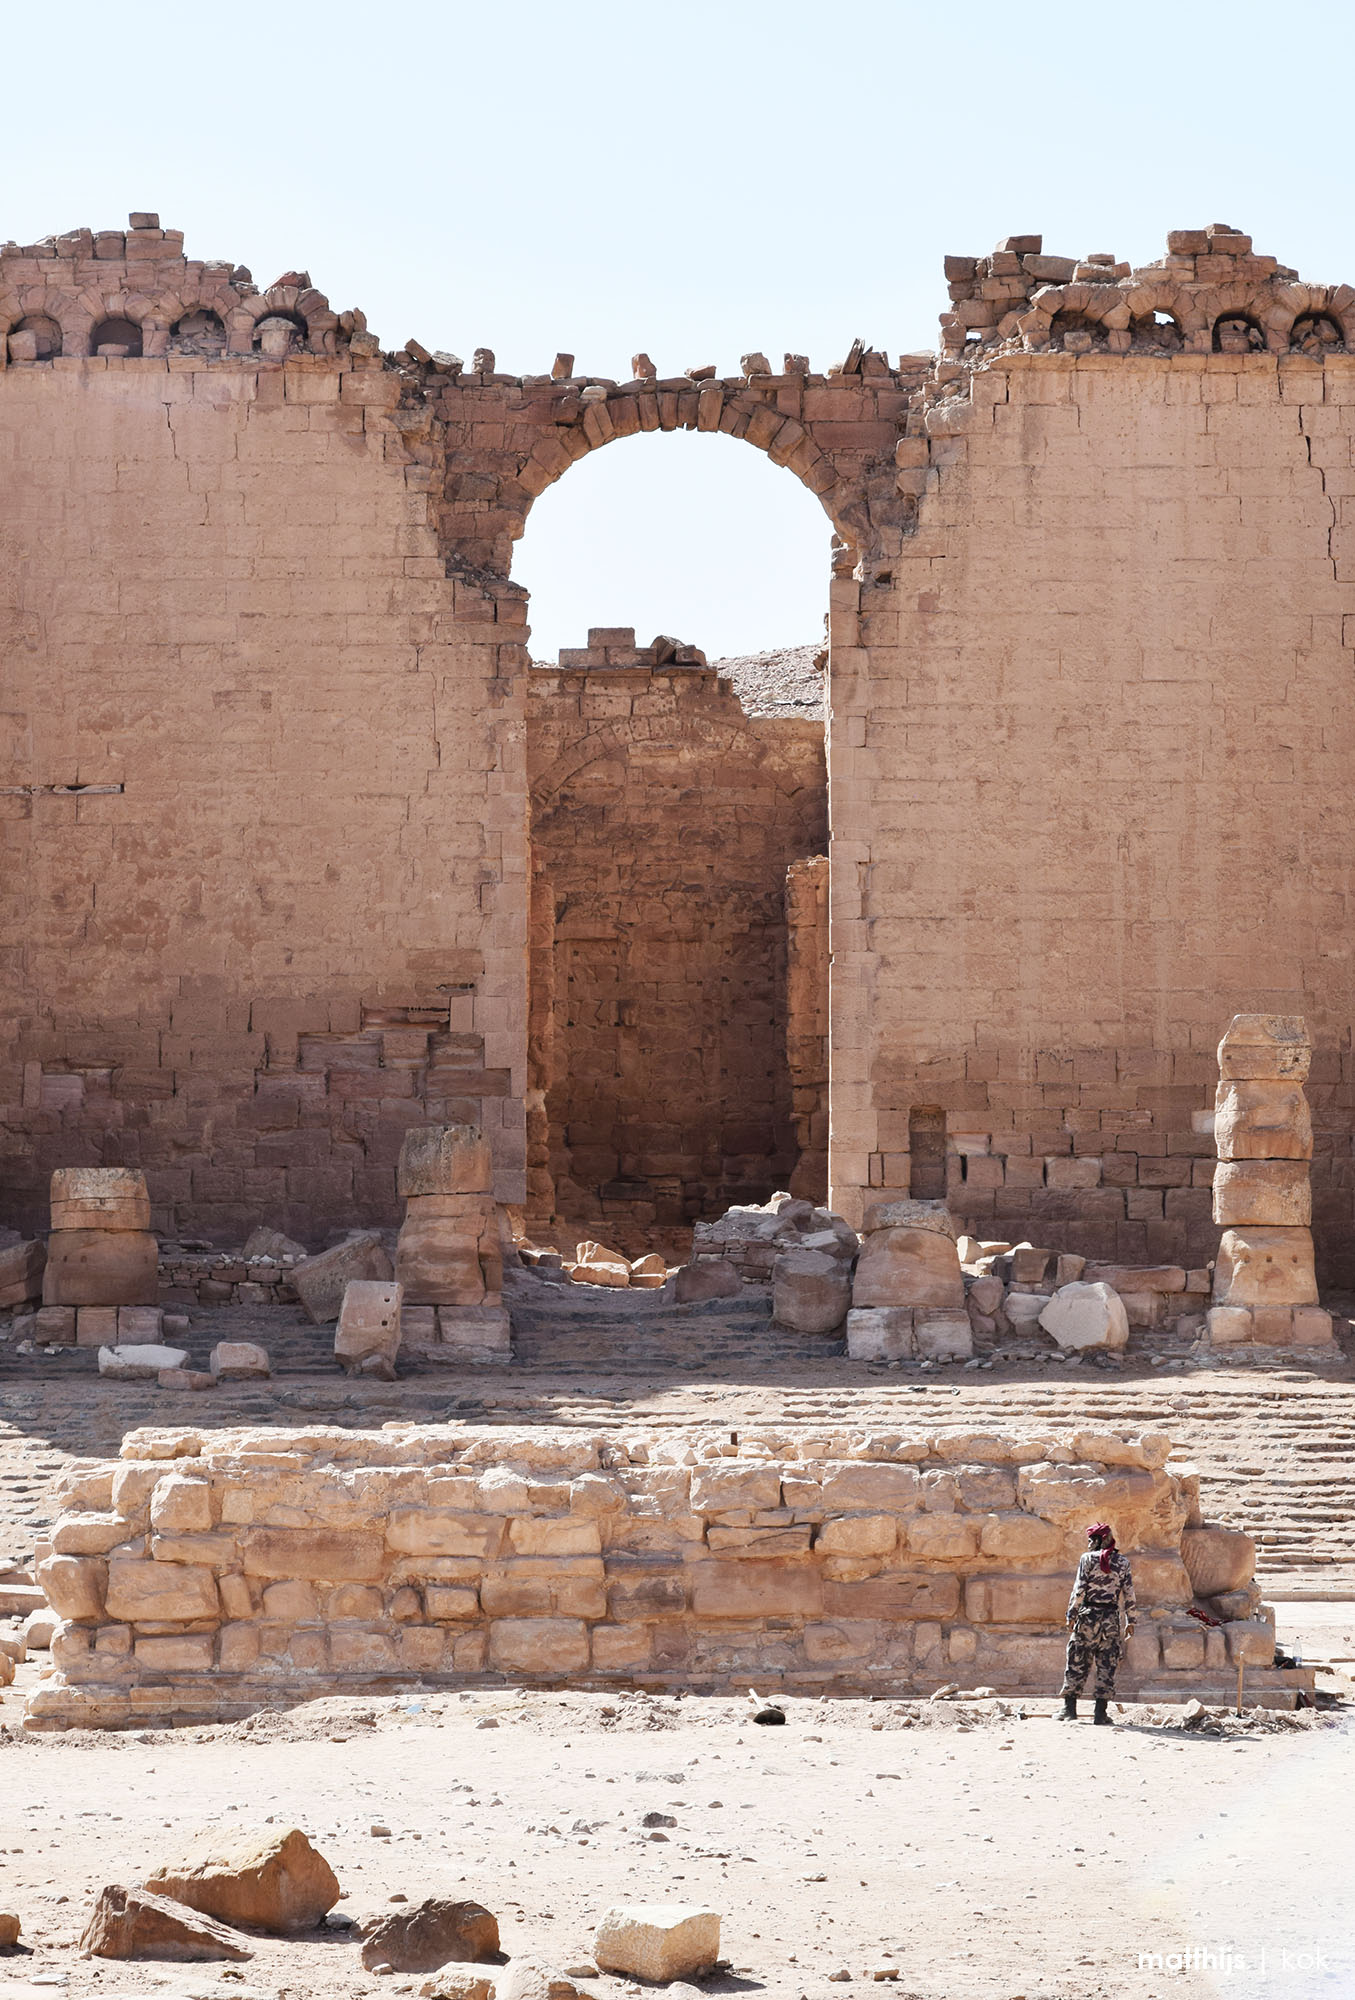 Temple of Dushares, Petra, Jordan | Photography by Matthijs Kok